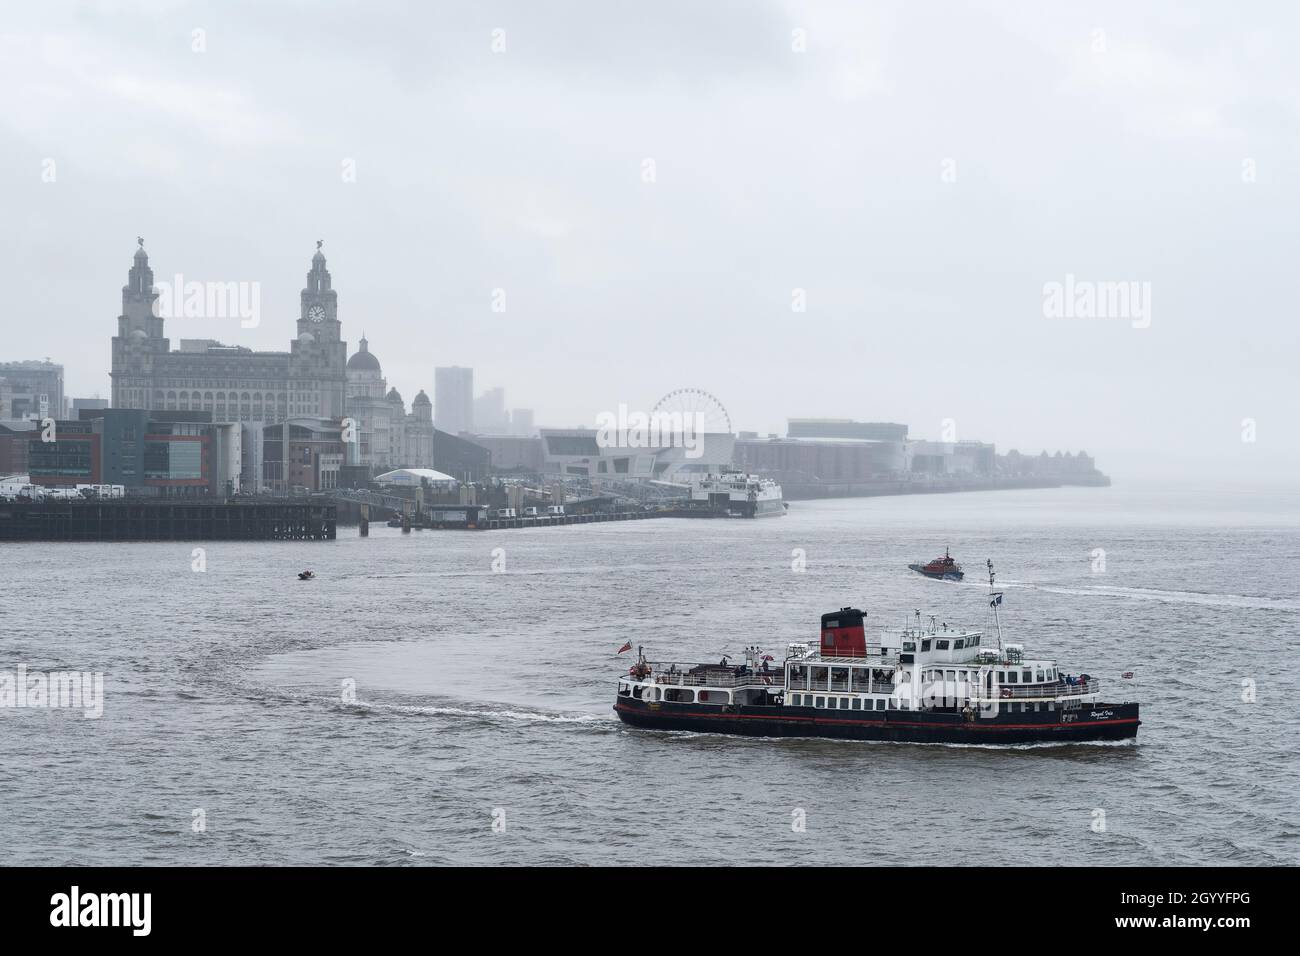 Royal Iris of the Mersey verlässt das Hafengebiet von Liverpool, um Passagiere über den Fluss Mersey zu befördern Stockfoto